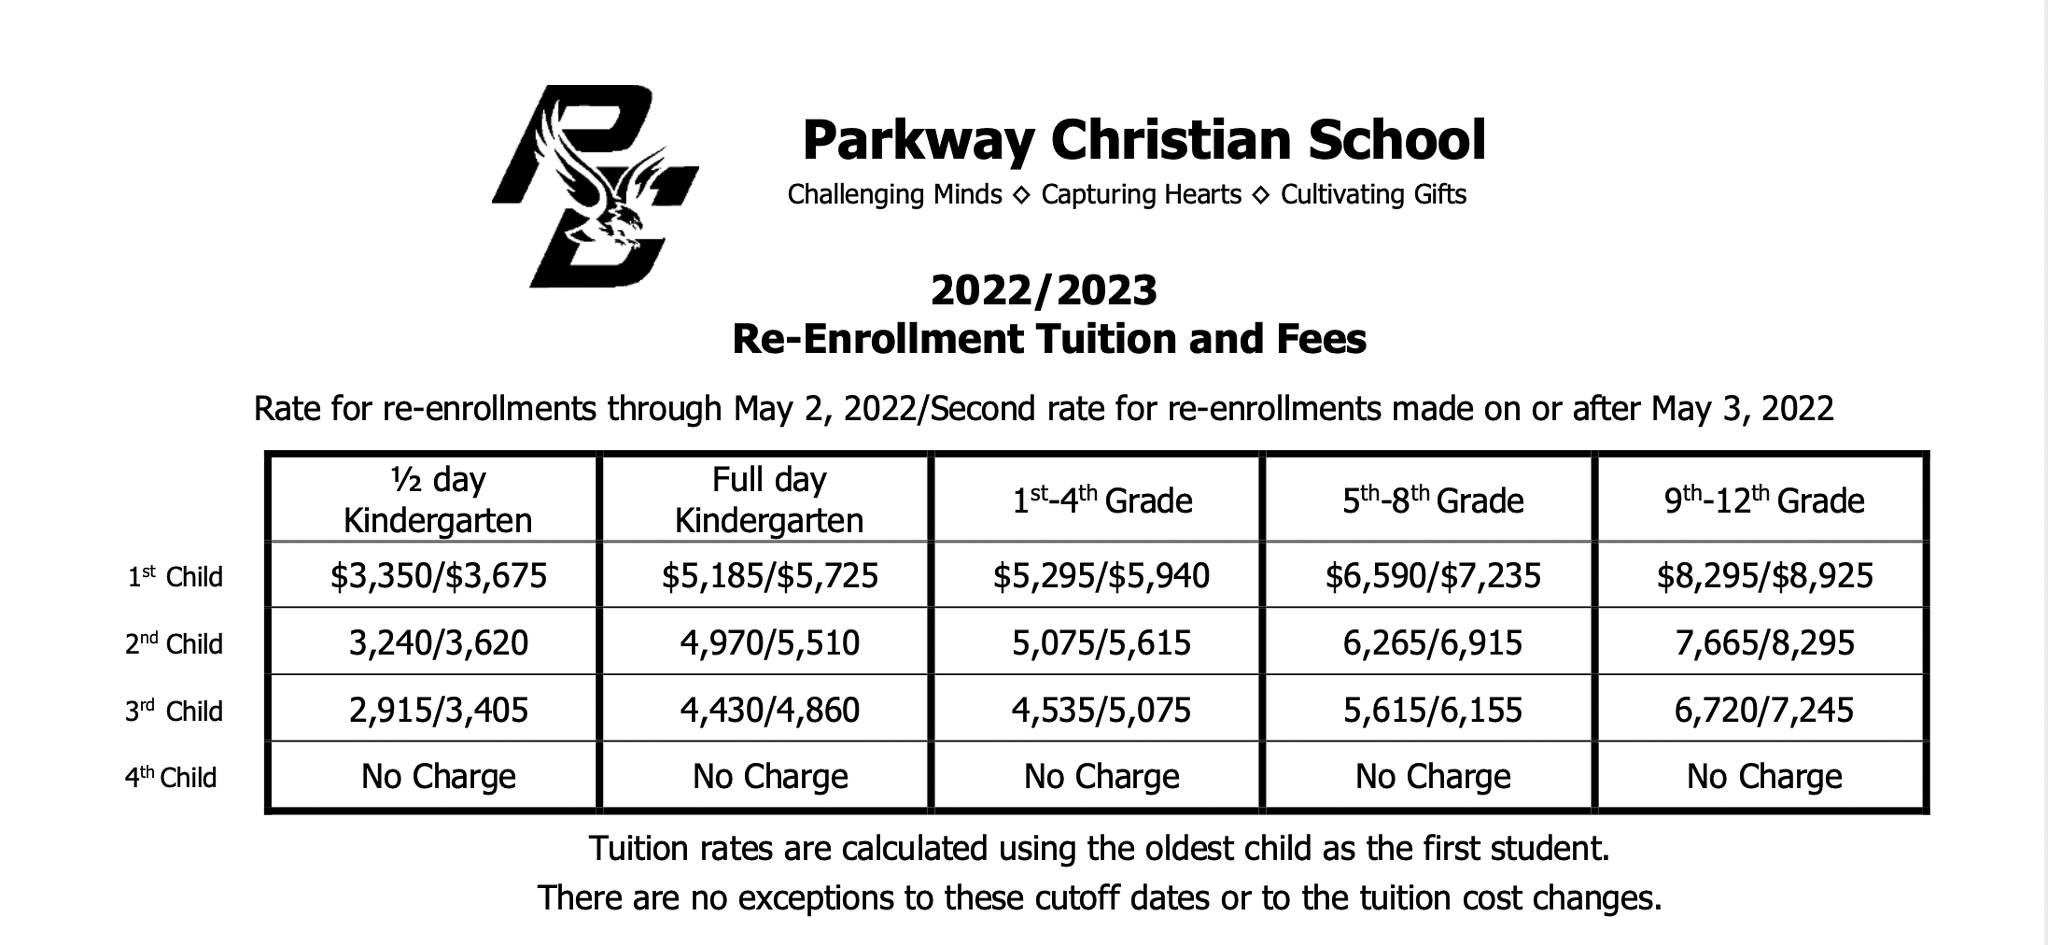 re-enrollment-2022-2023-parkway-christian-school